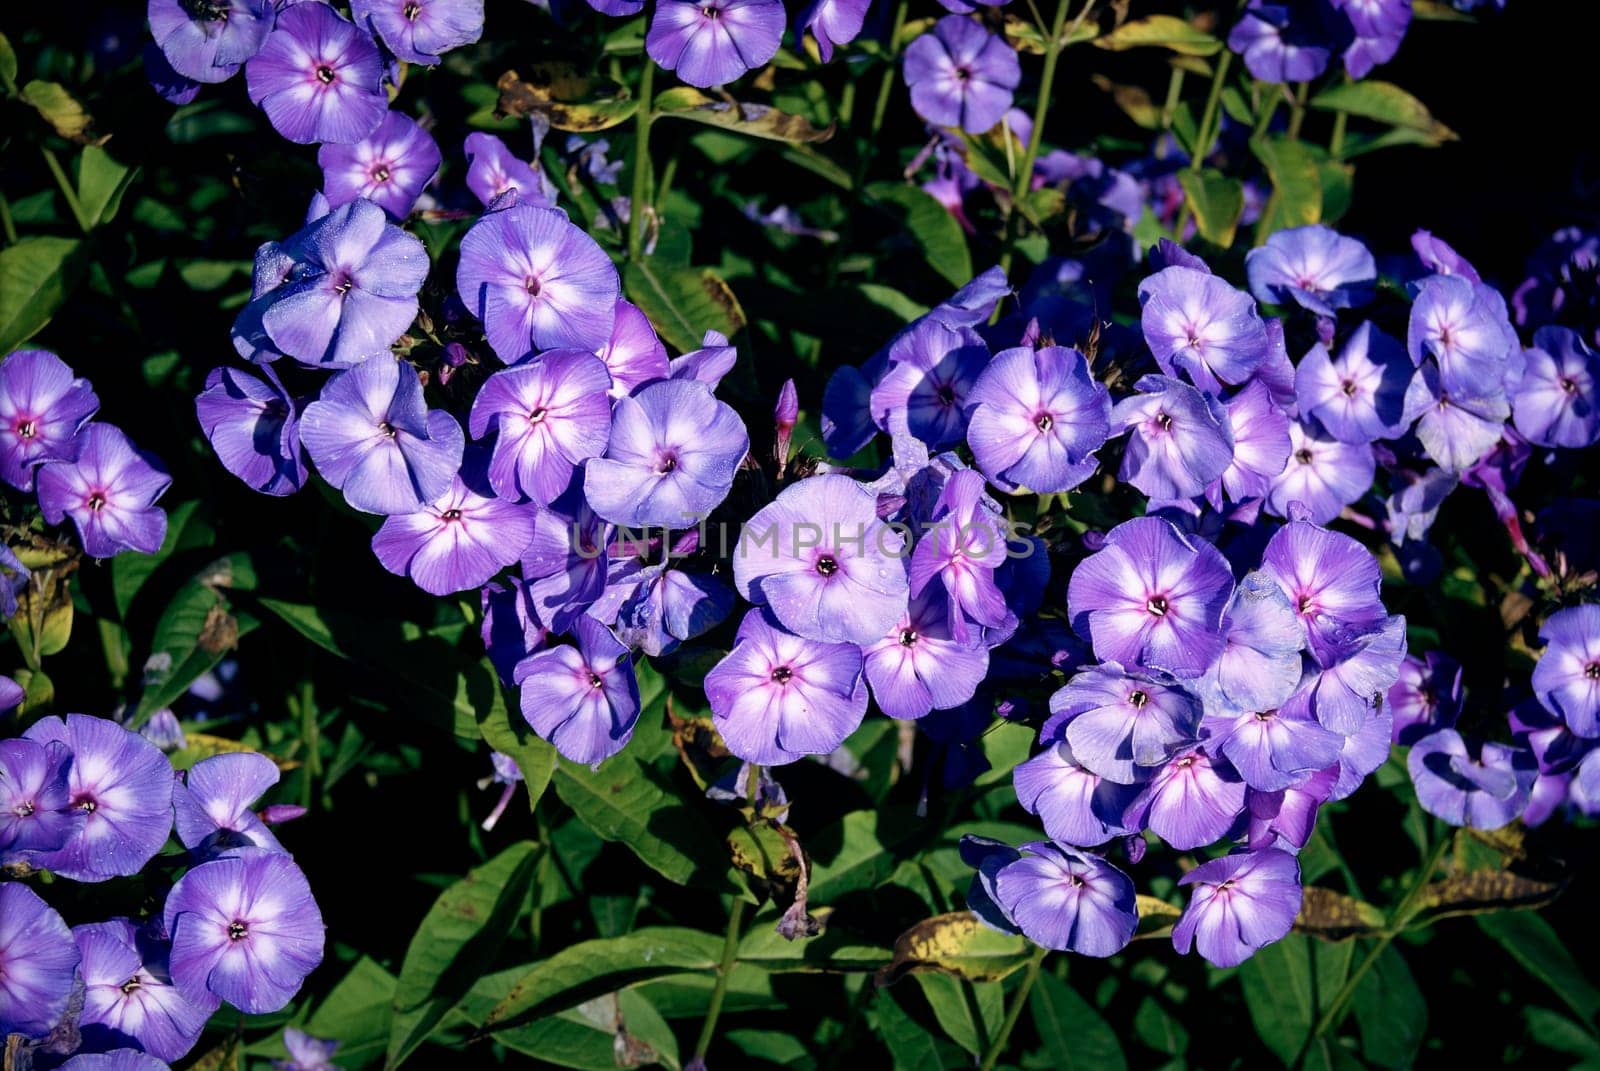 shrub phlox blue lilac blooms in the garden in green foliage